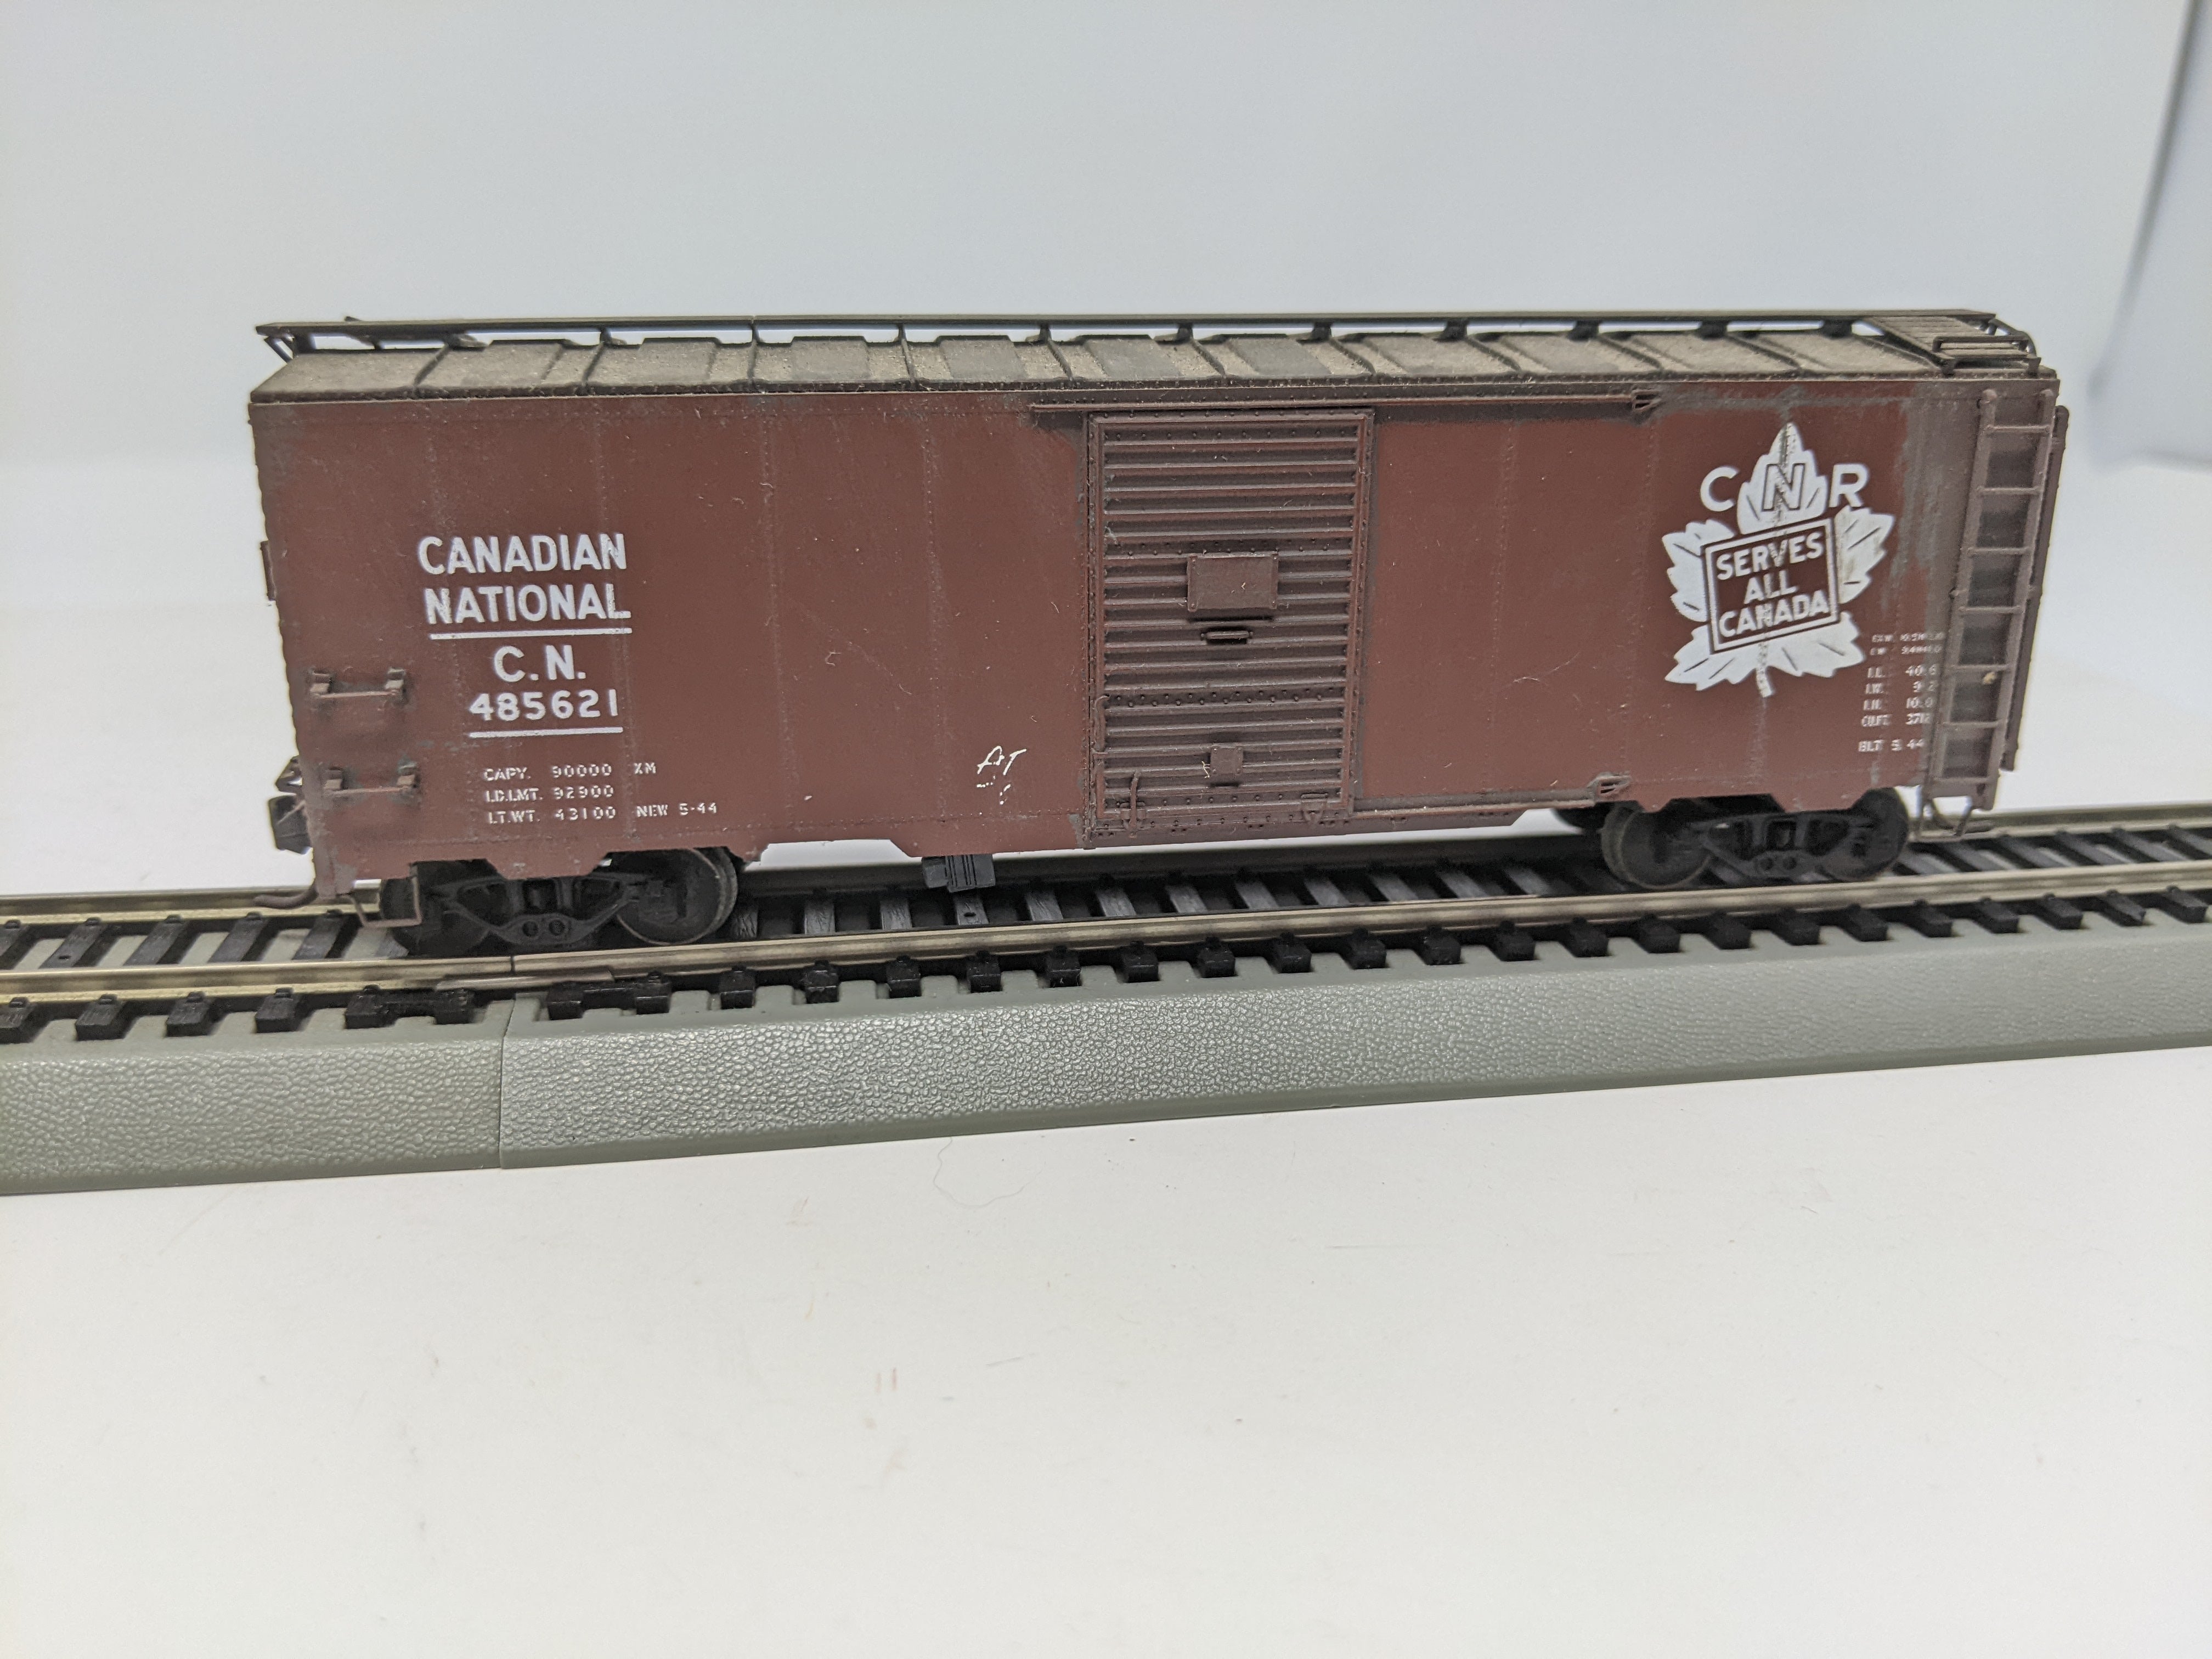 USED HO Scale, 40' Box Car, Canadian National CN #485621, Read Description